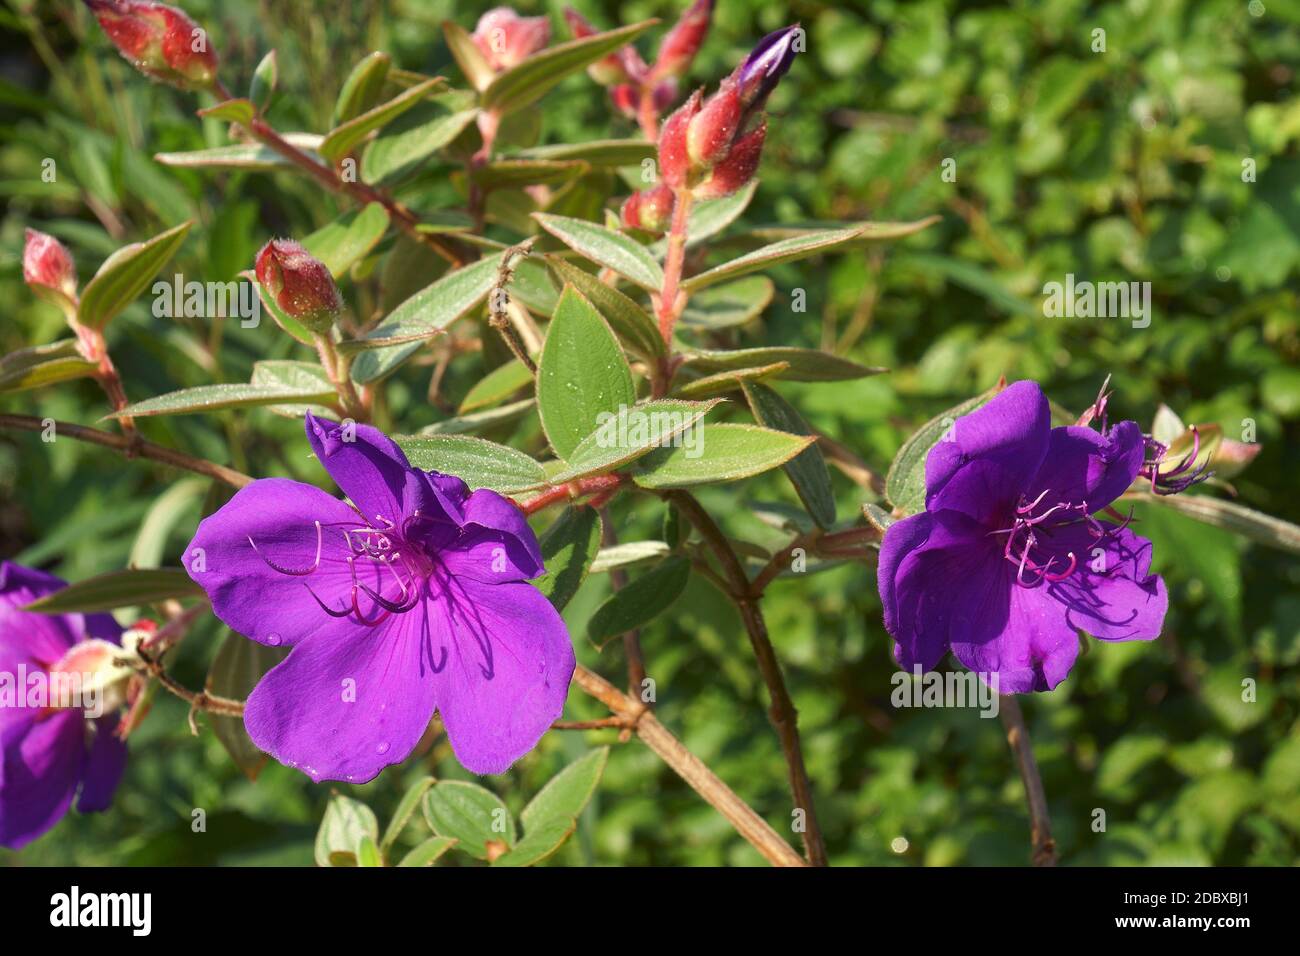 Glory bush (Tibouchina urvilleana). Called Lasiandra, Princess flower, Pleroma and Purple glory tree also. Stock Photo